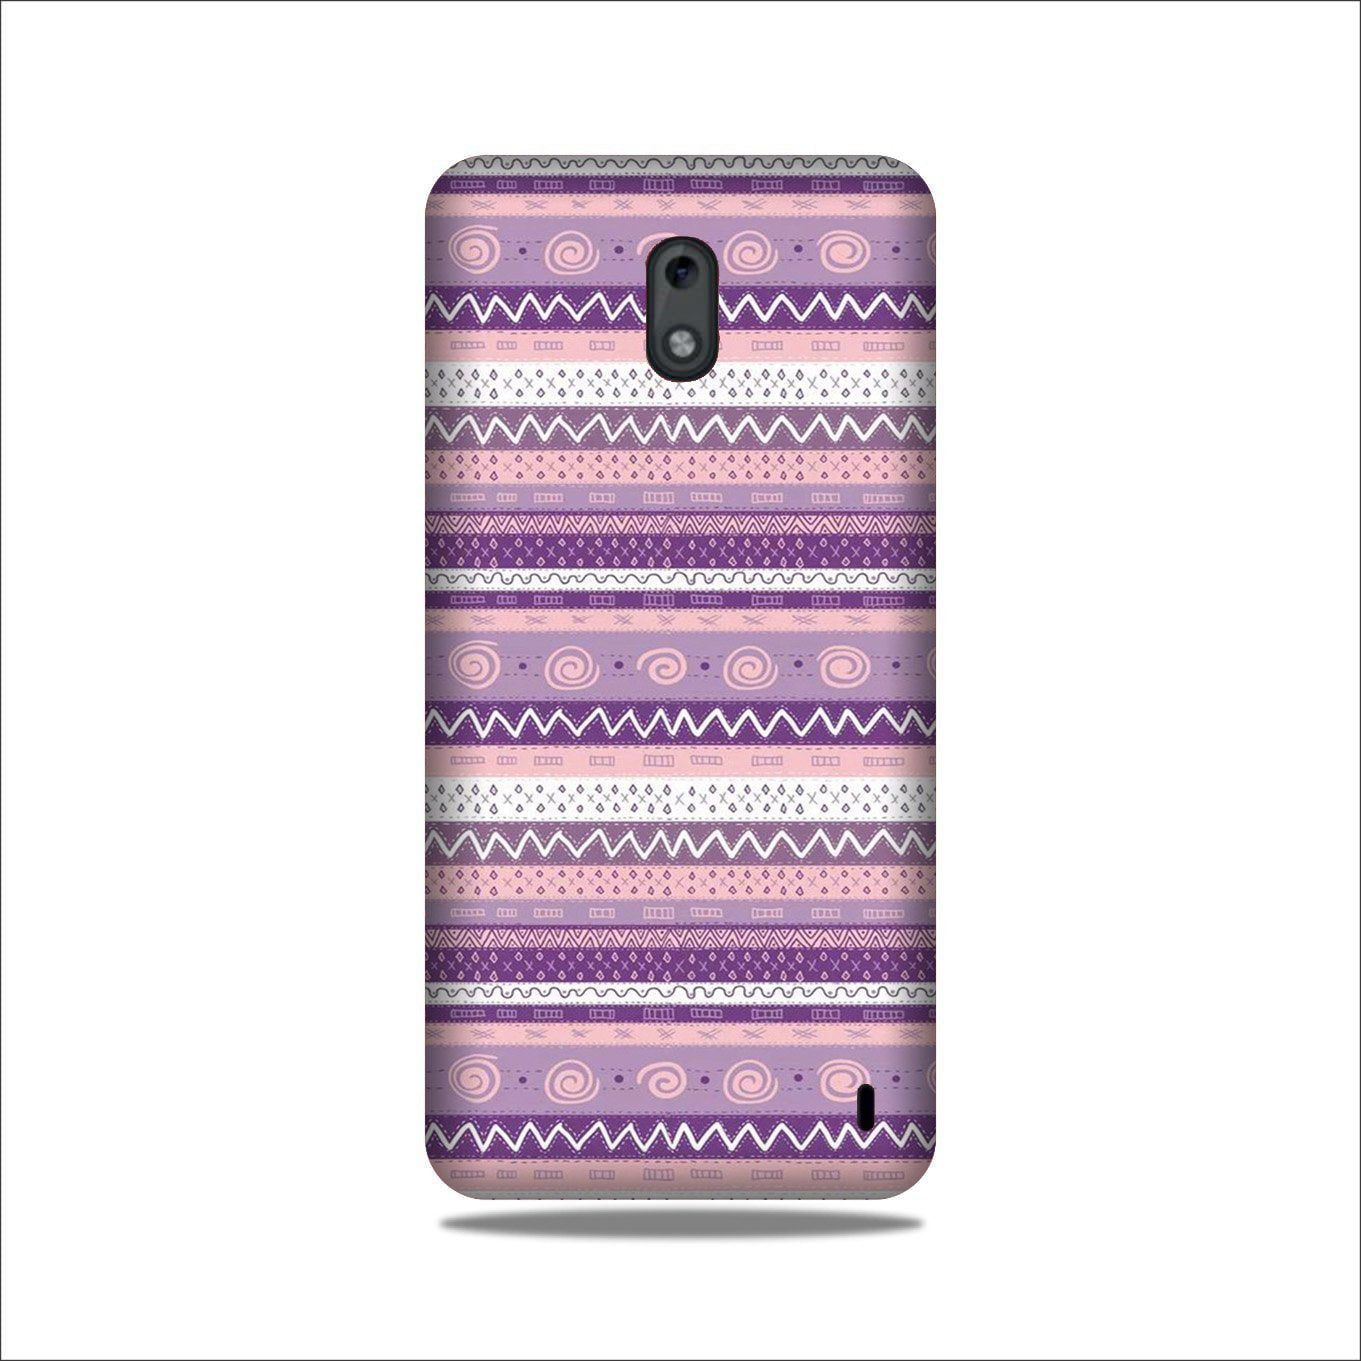 Zigzag line pattern3 Case for Nokia 2